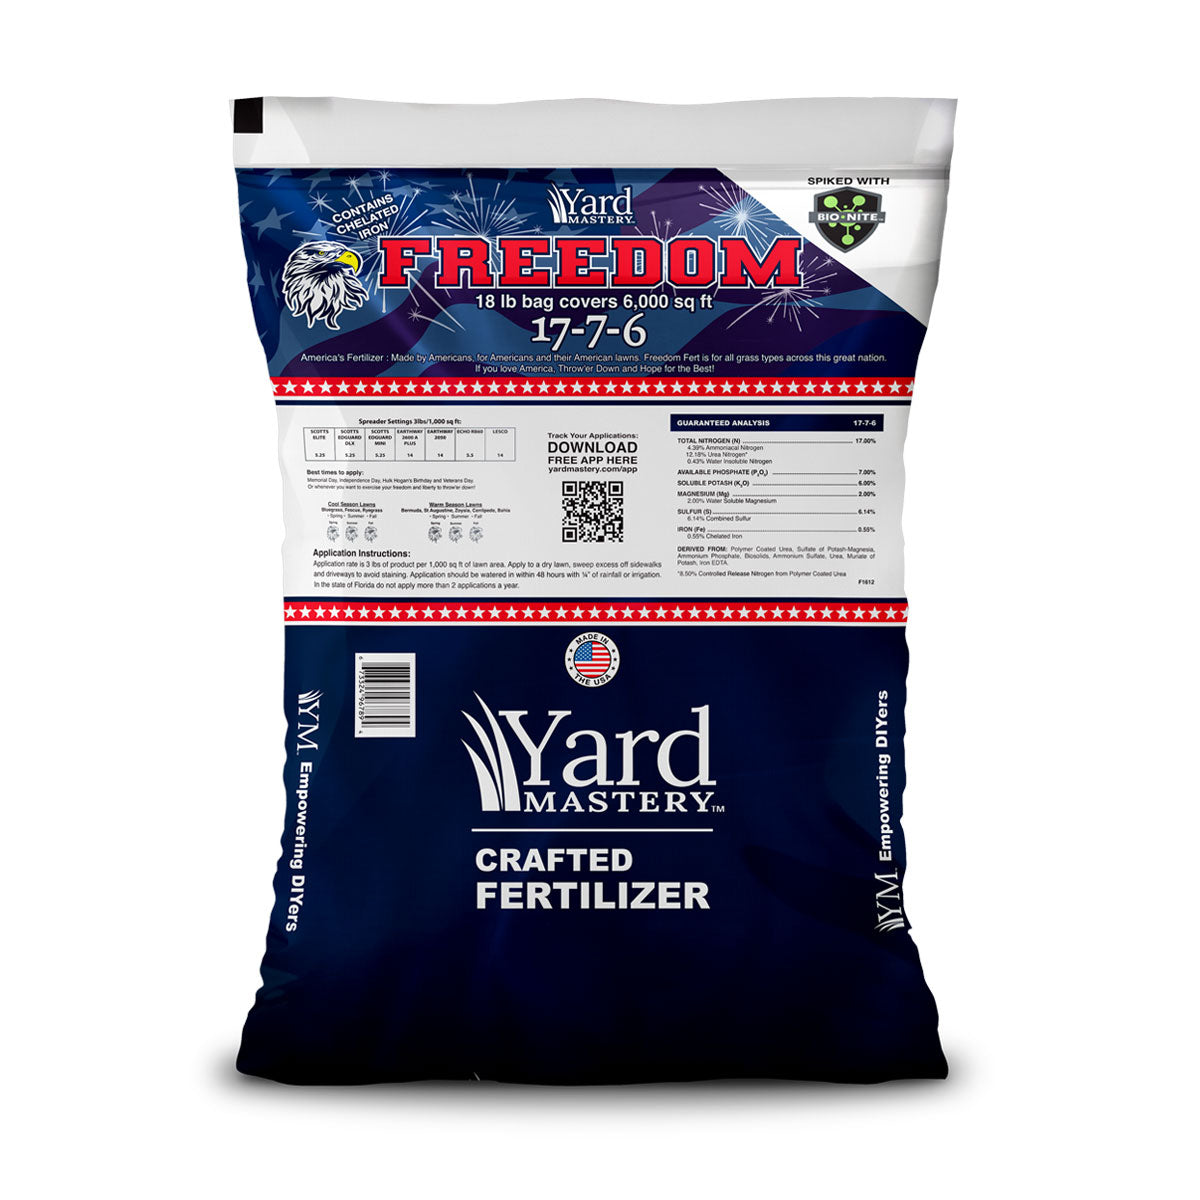 17-7-6 Freedom Fertilizer  3% chelated Iron, Magnesium and Bio-Nite - Granular Lawn Fertilizer